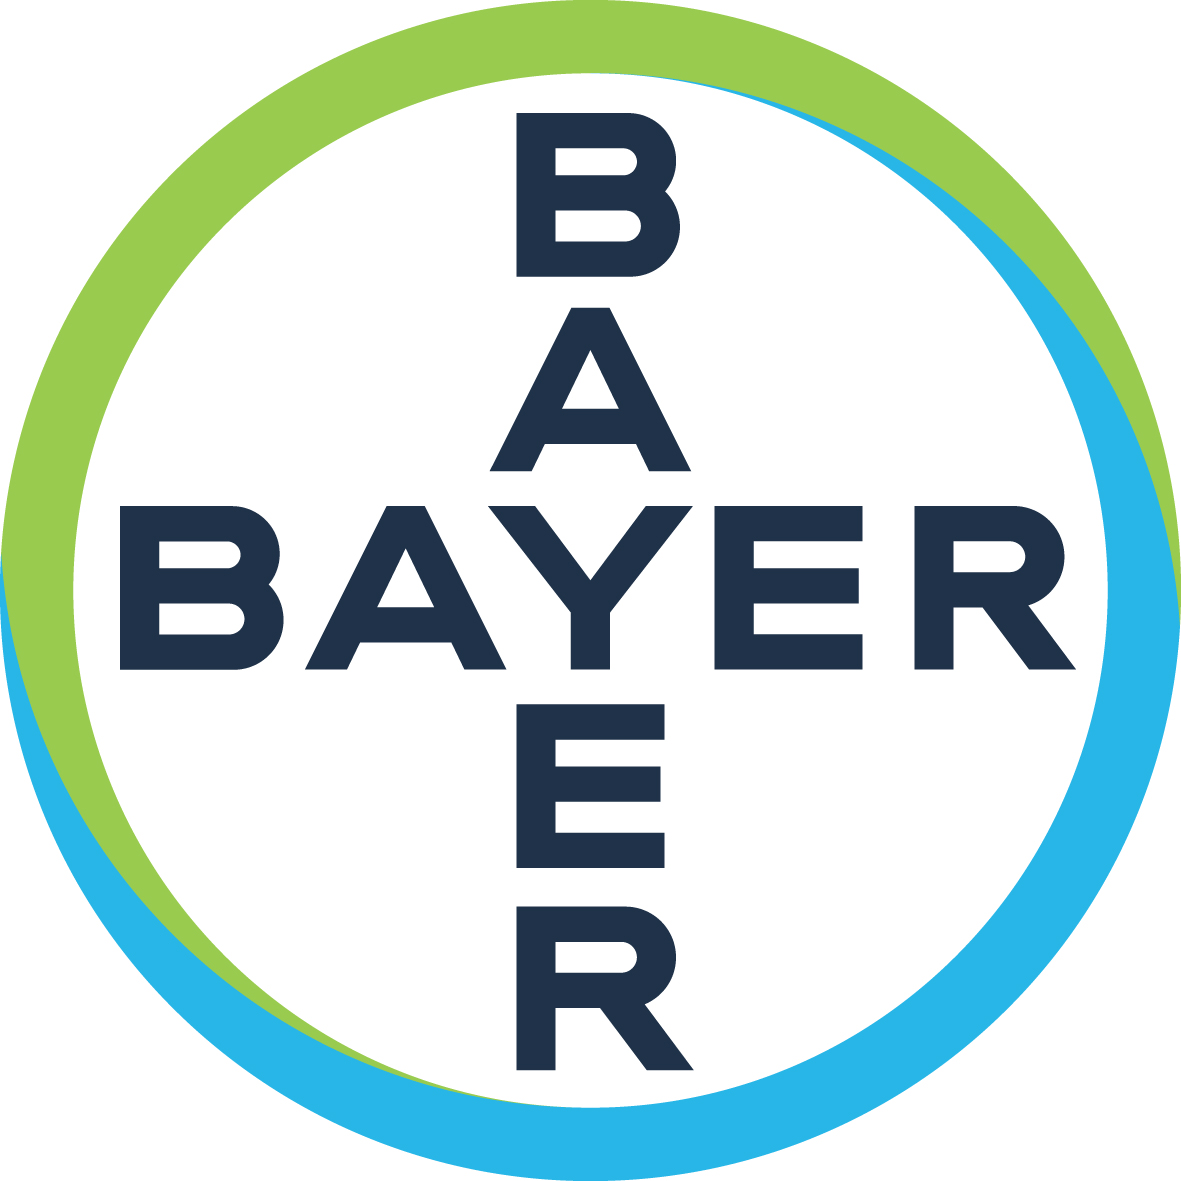 Bayers logo